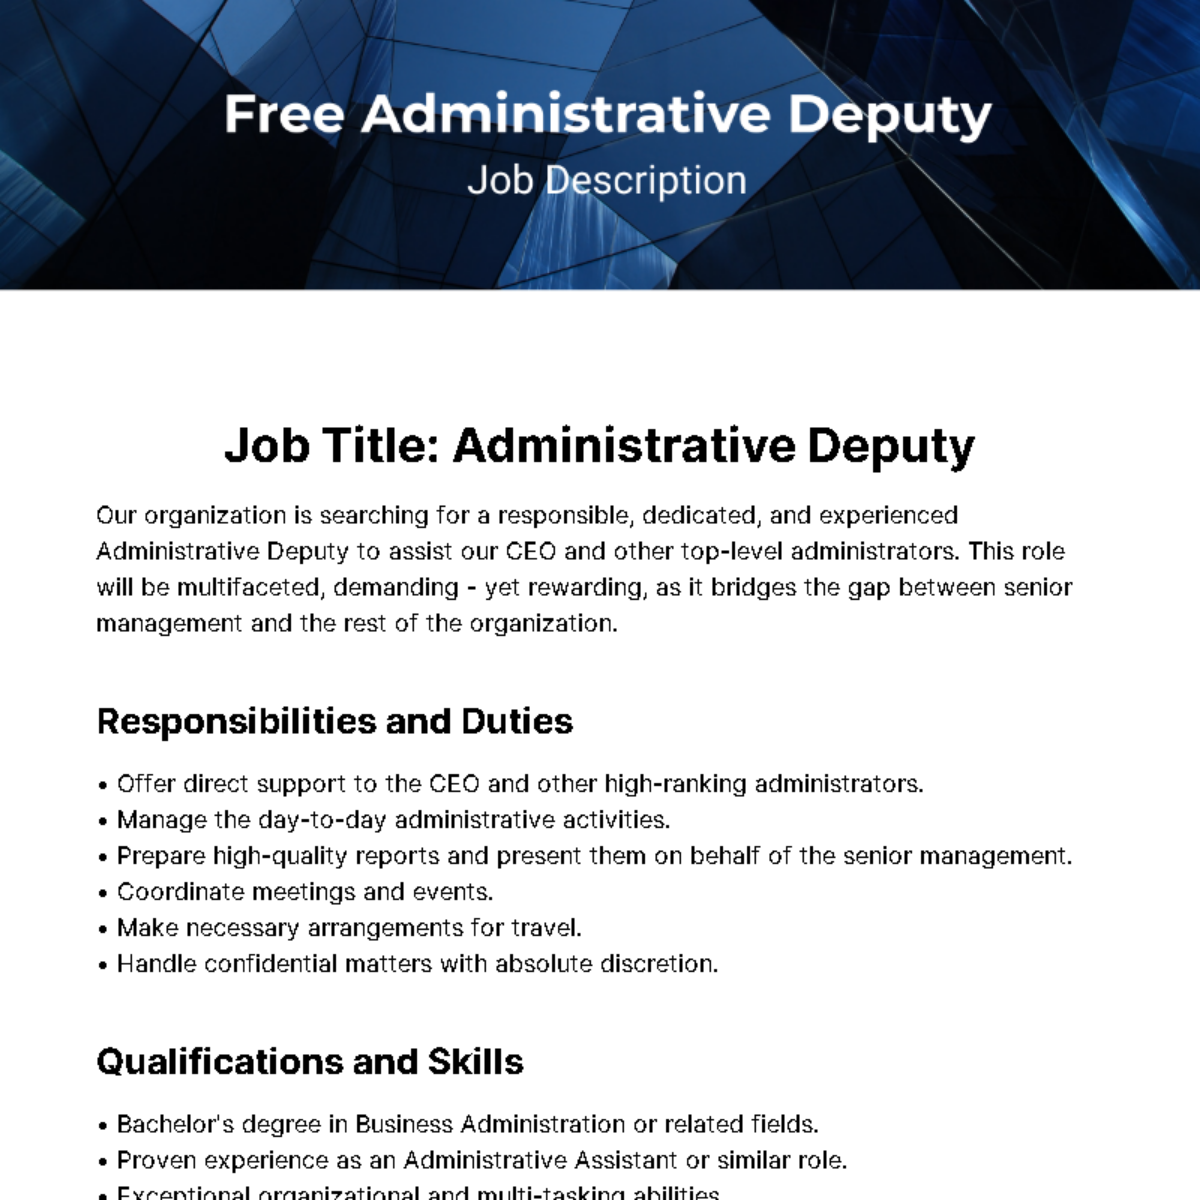 Free Administrative Deputy Job Description Template